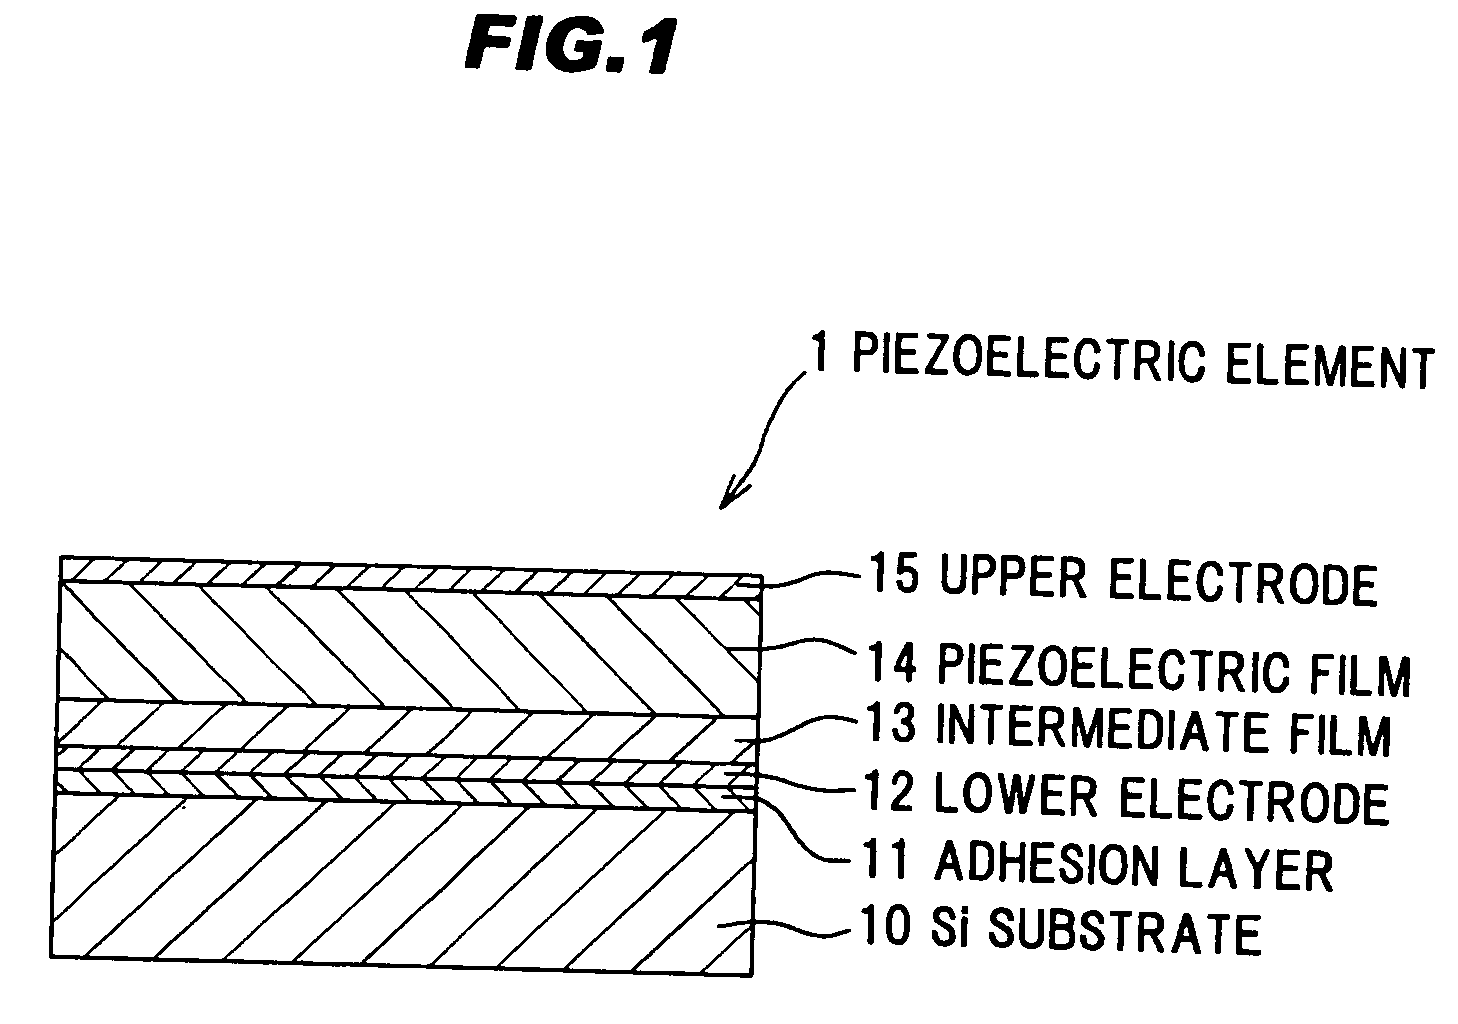 Piezoelectric element